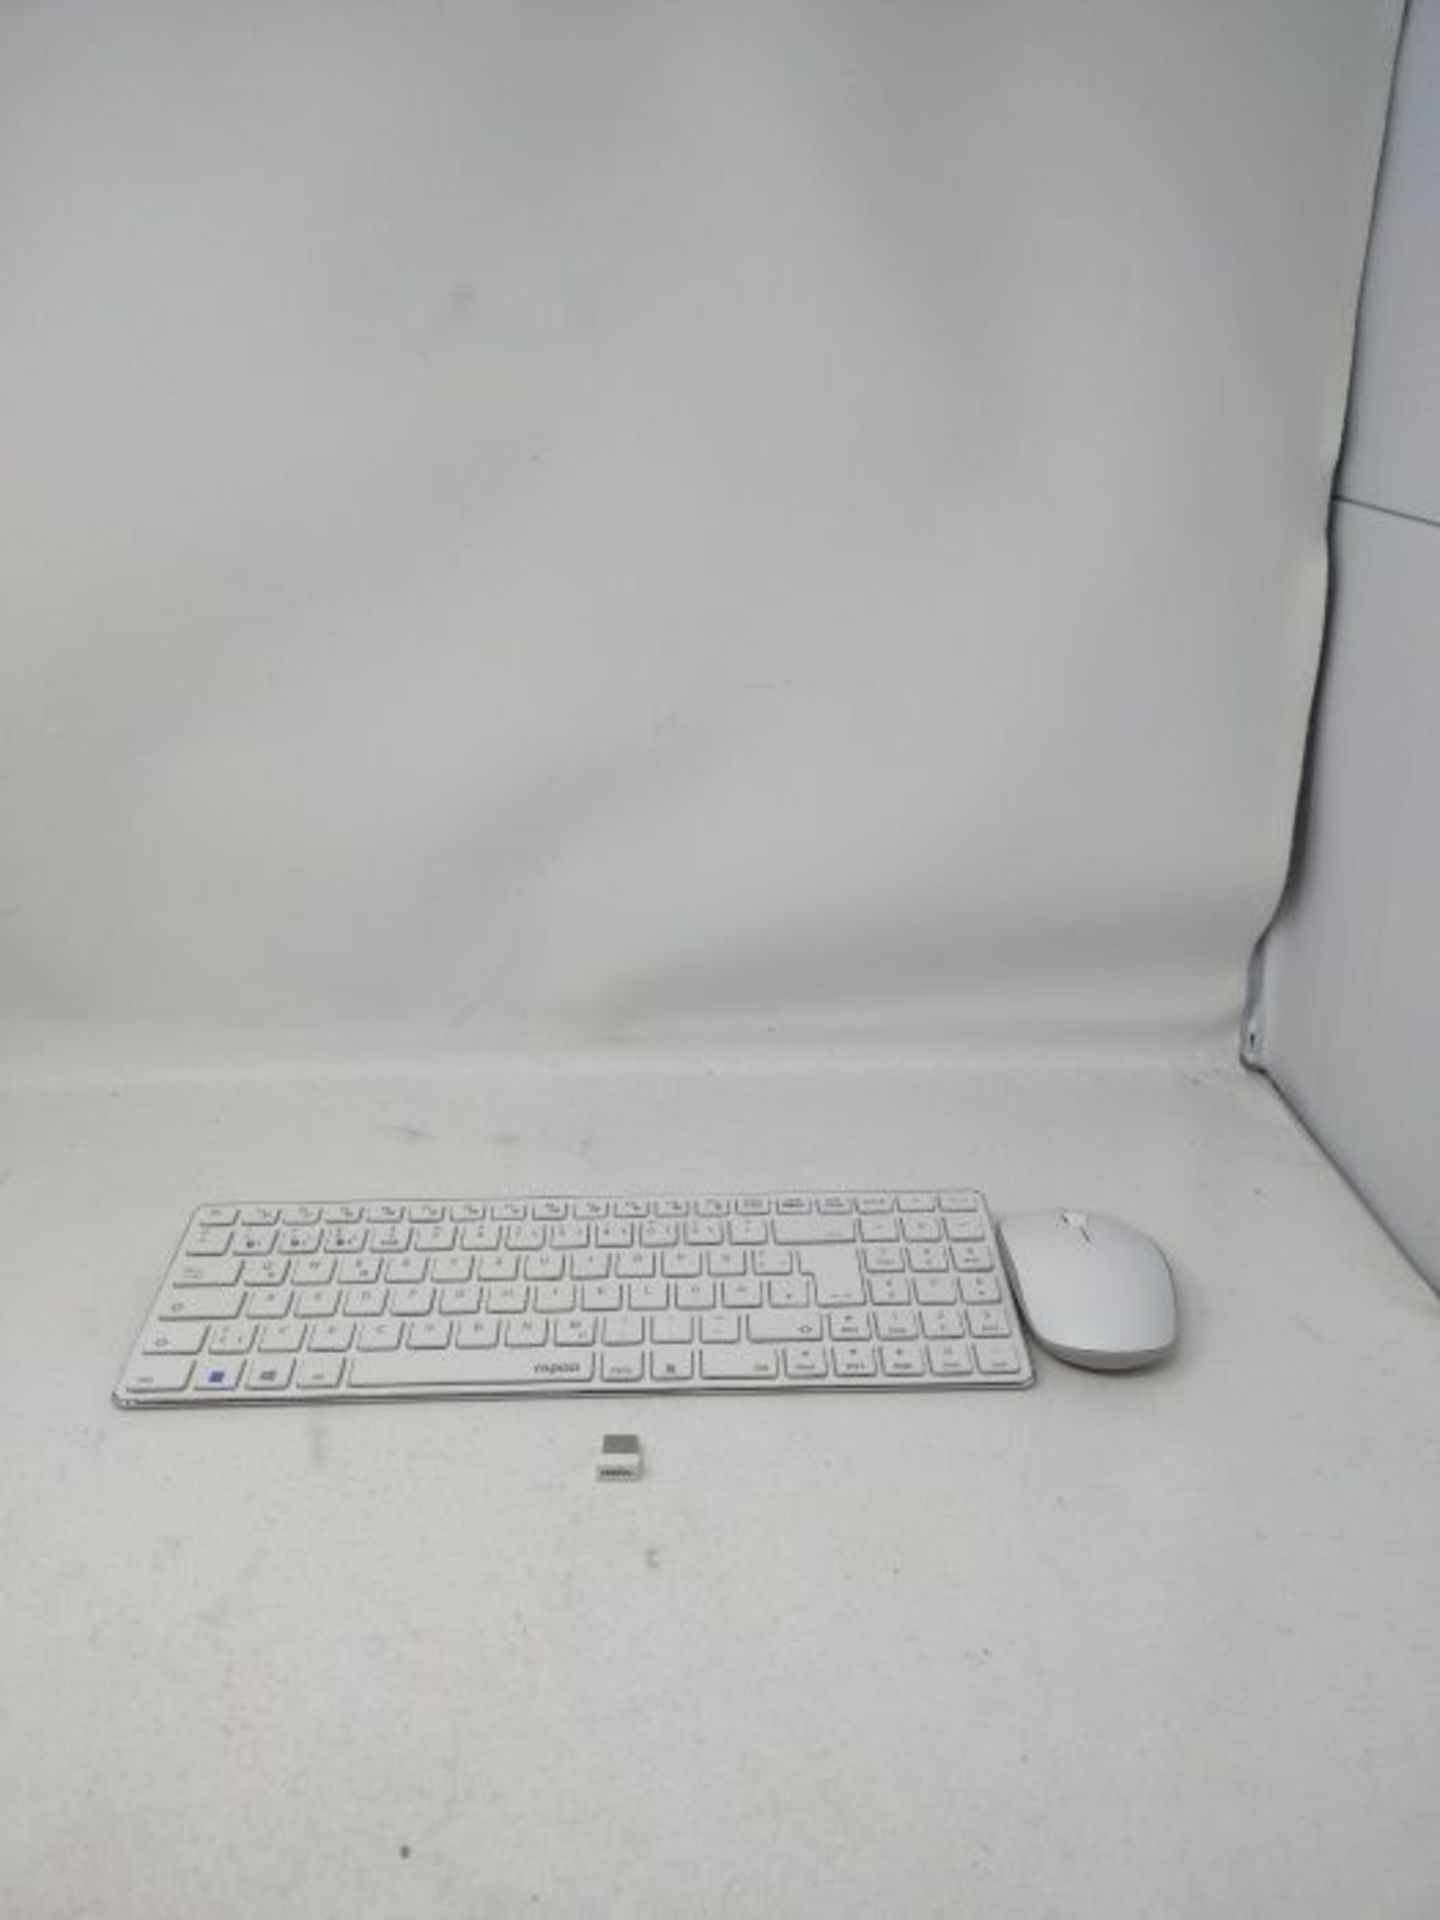 Rapoo 9300M Wireless Keyboard Mouse Set, Bluetooth and Wireless (2.4 GHz) via USB, Fla - Image 2 of 2